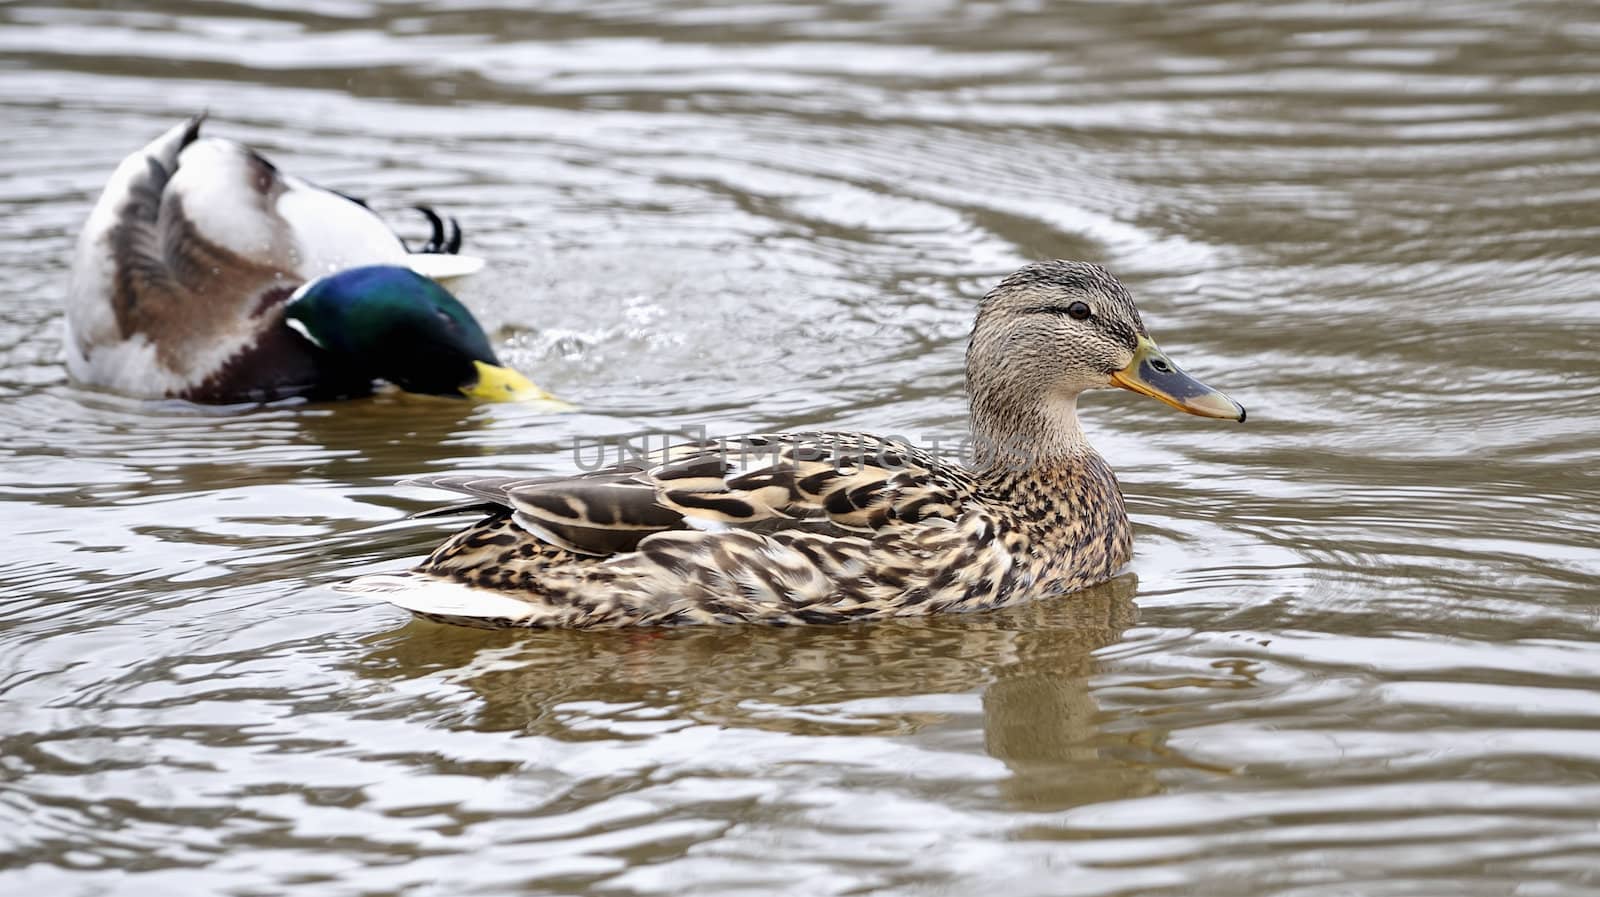 Mallard Ducks pair in Neris river. Cloudy spring day